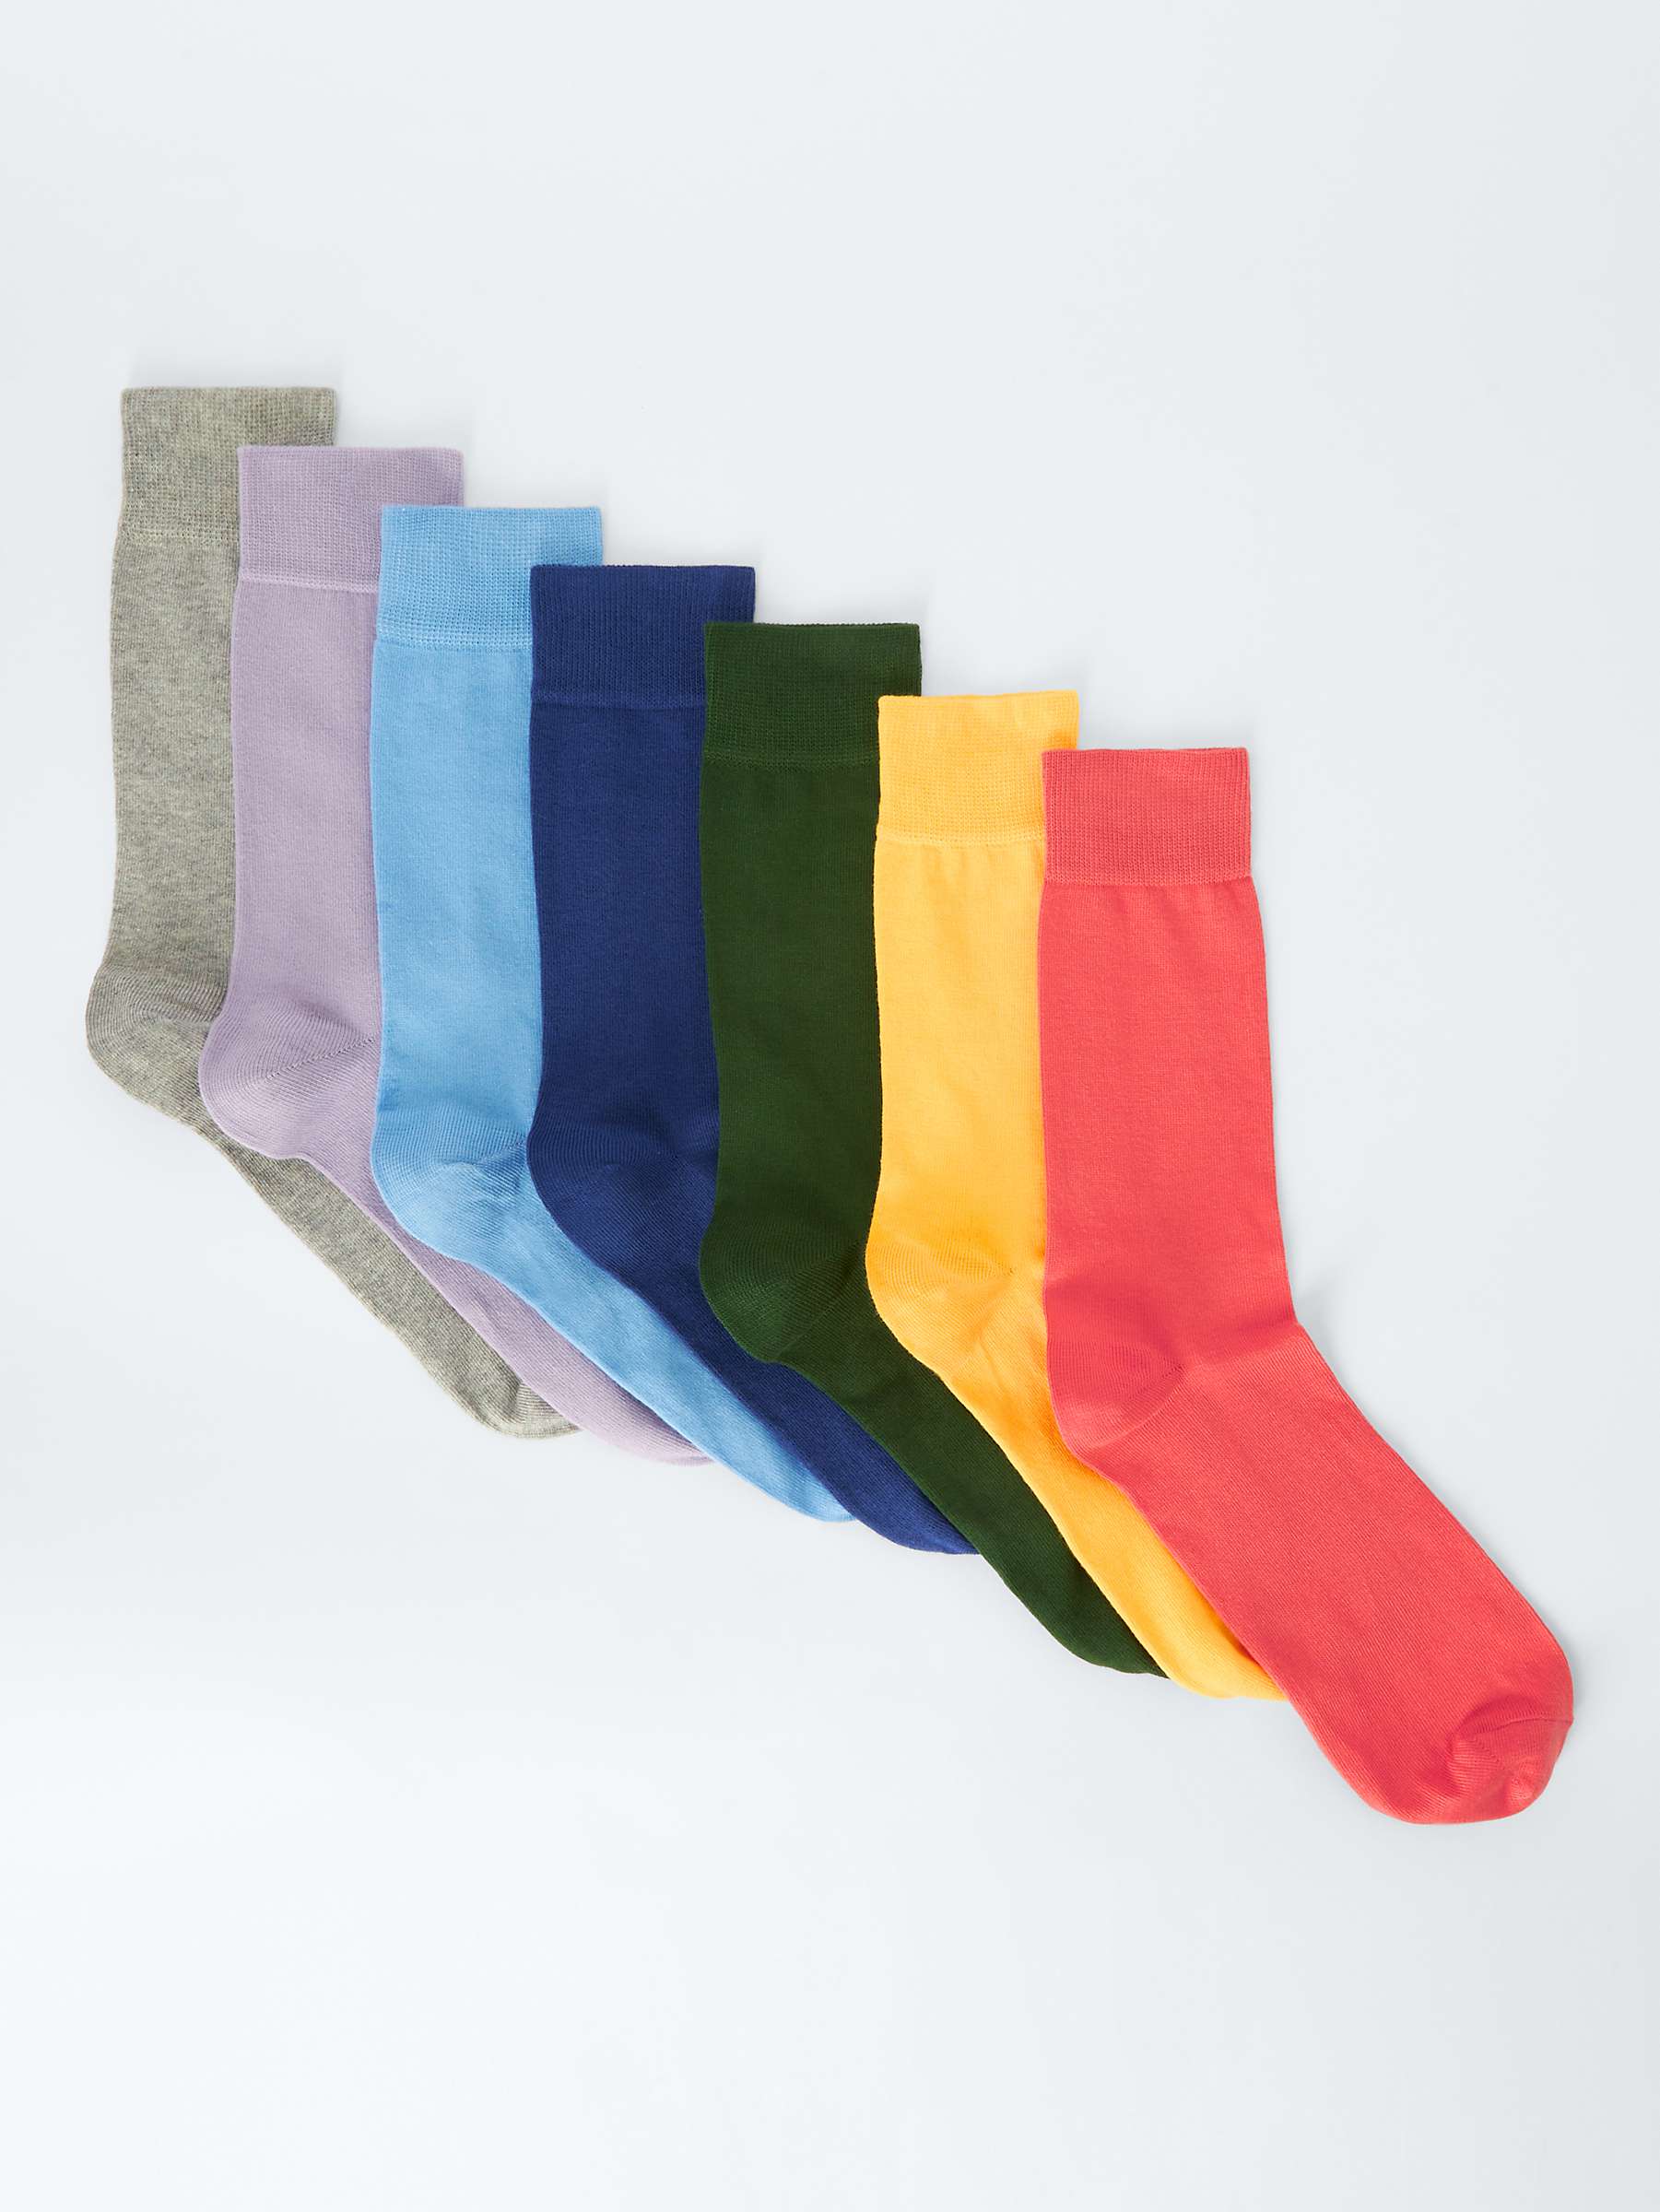 Buy John Lewis ANYDAY Plain Cotton Socks, Pack of 7, Multi Online at johnlewis.com